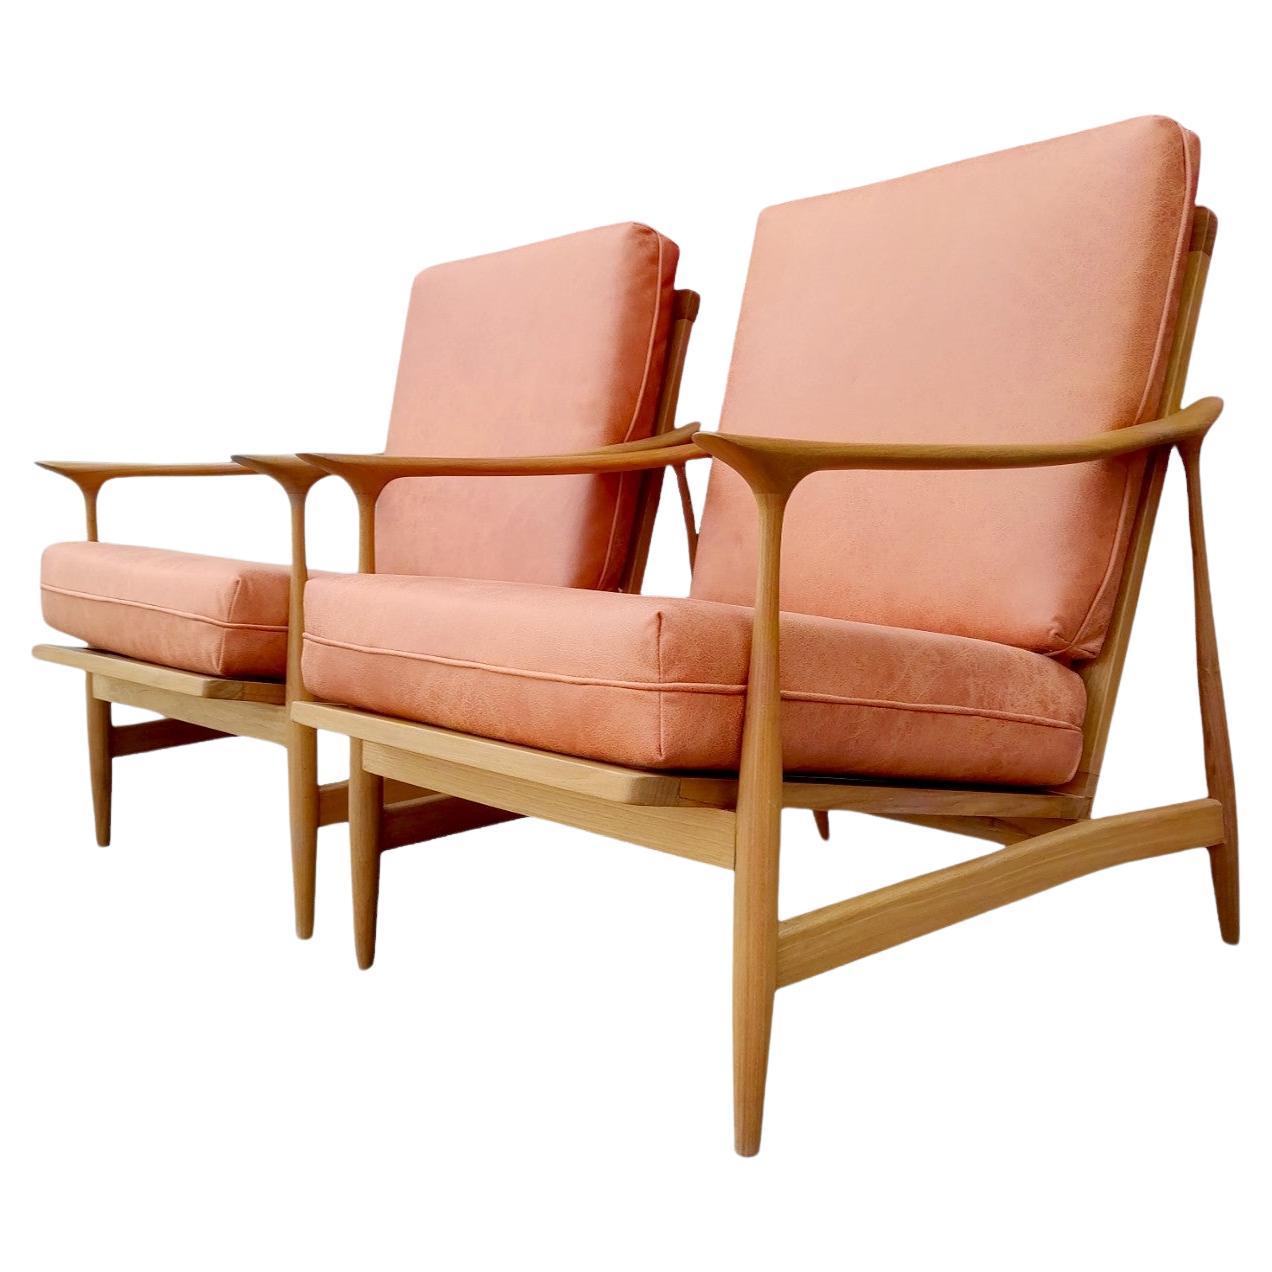 Pair of Mid-Century Modern Danish Style Arm Chairs